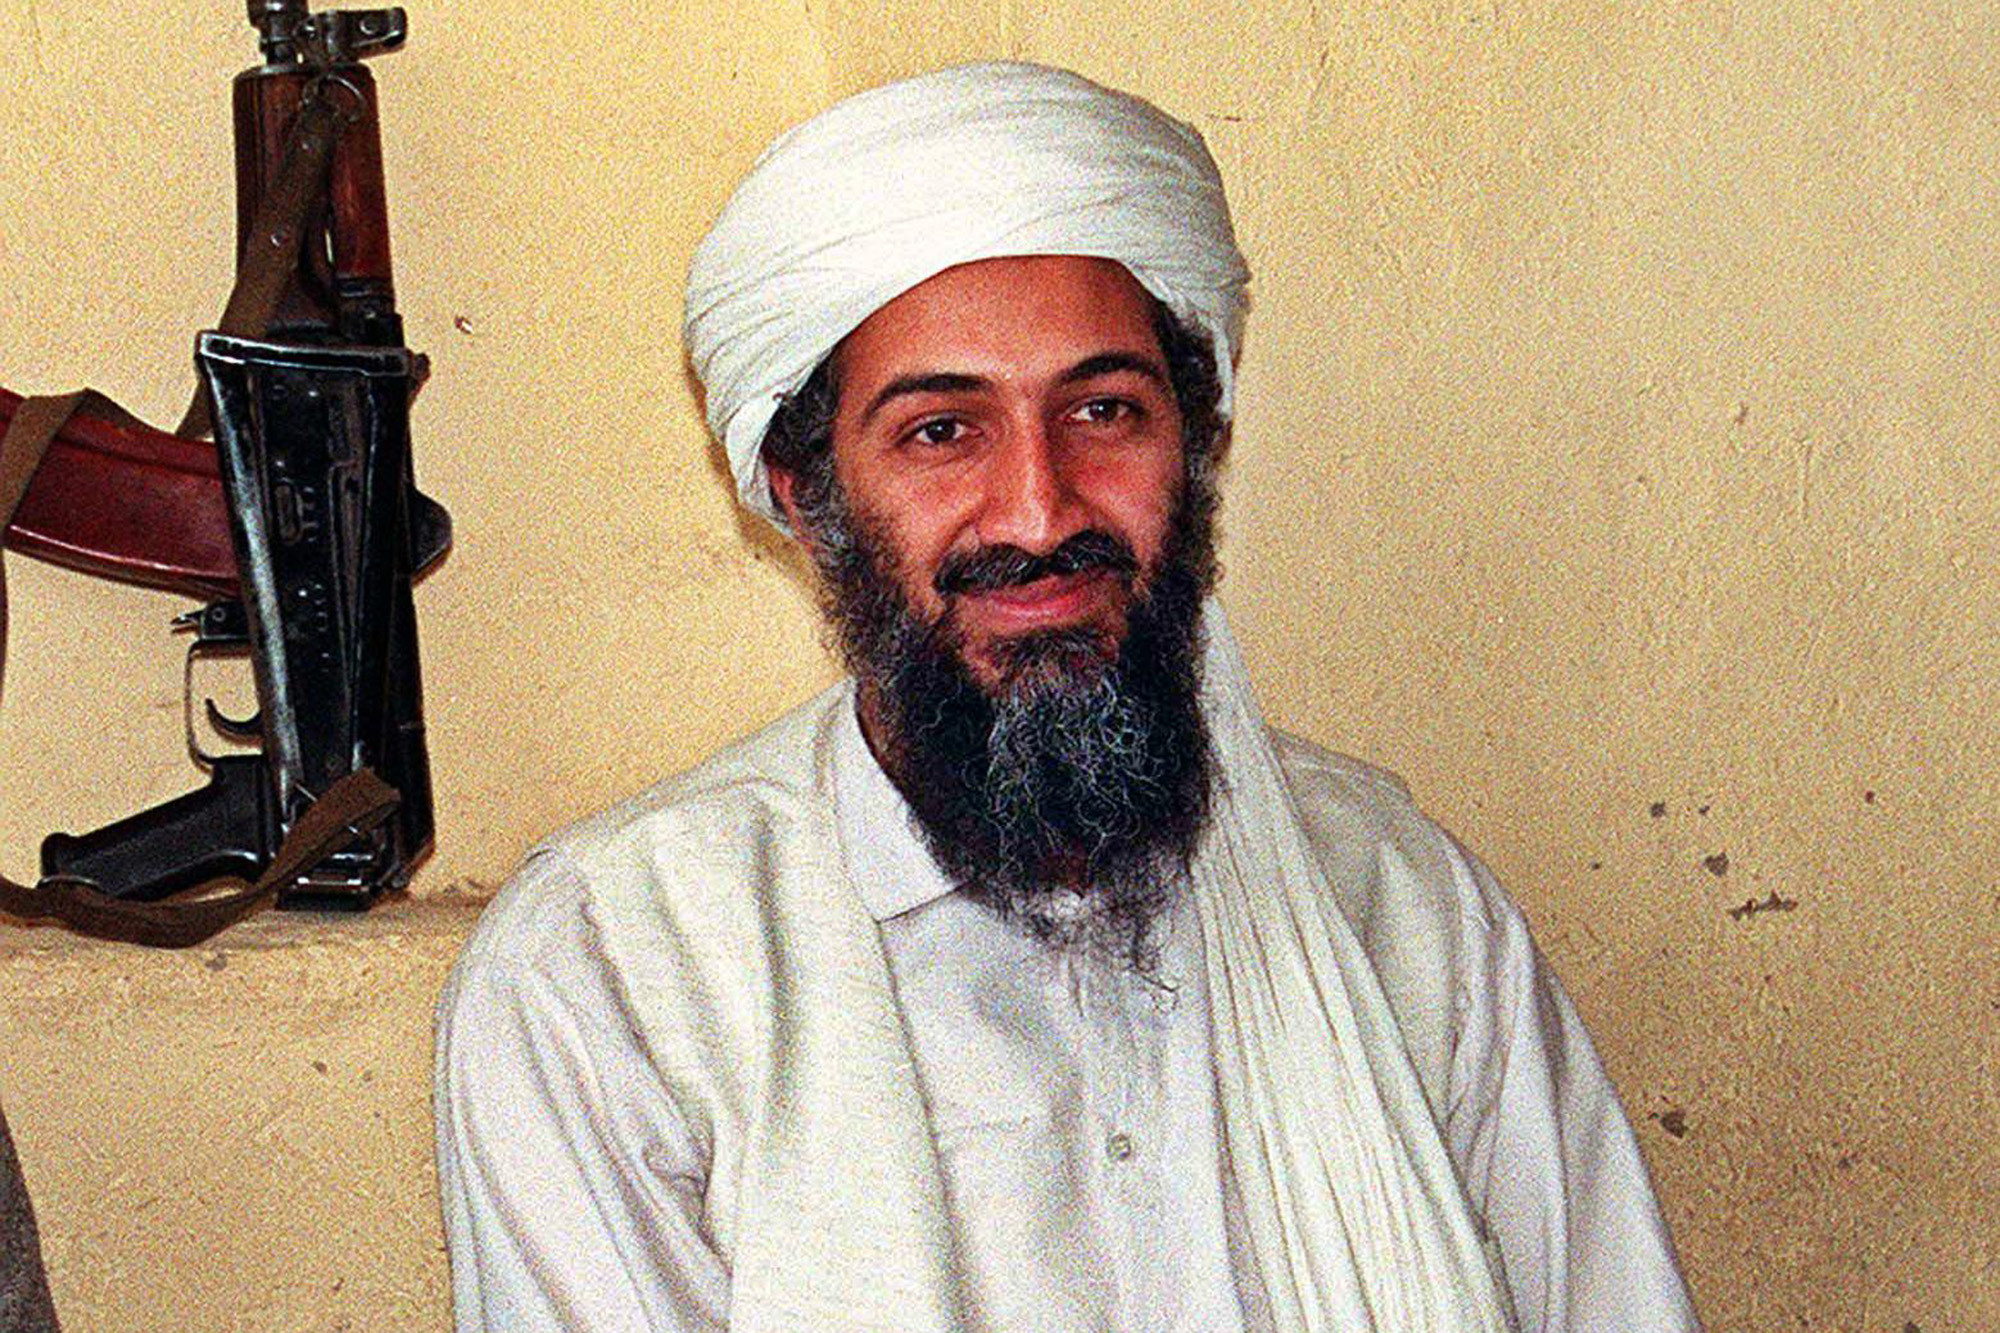 Bin Laden may have sent secret messages in porn videos: report